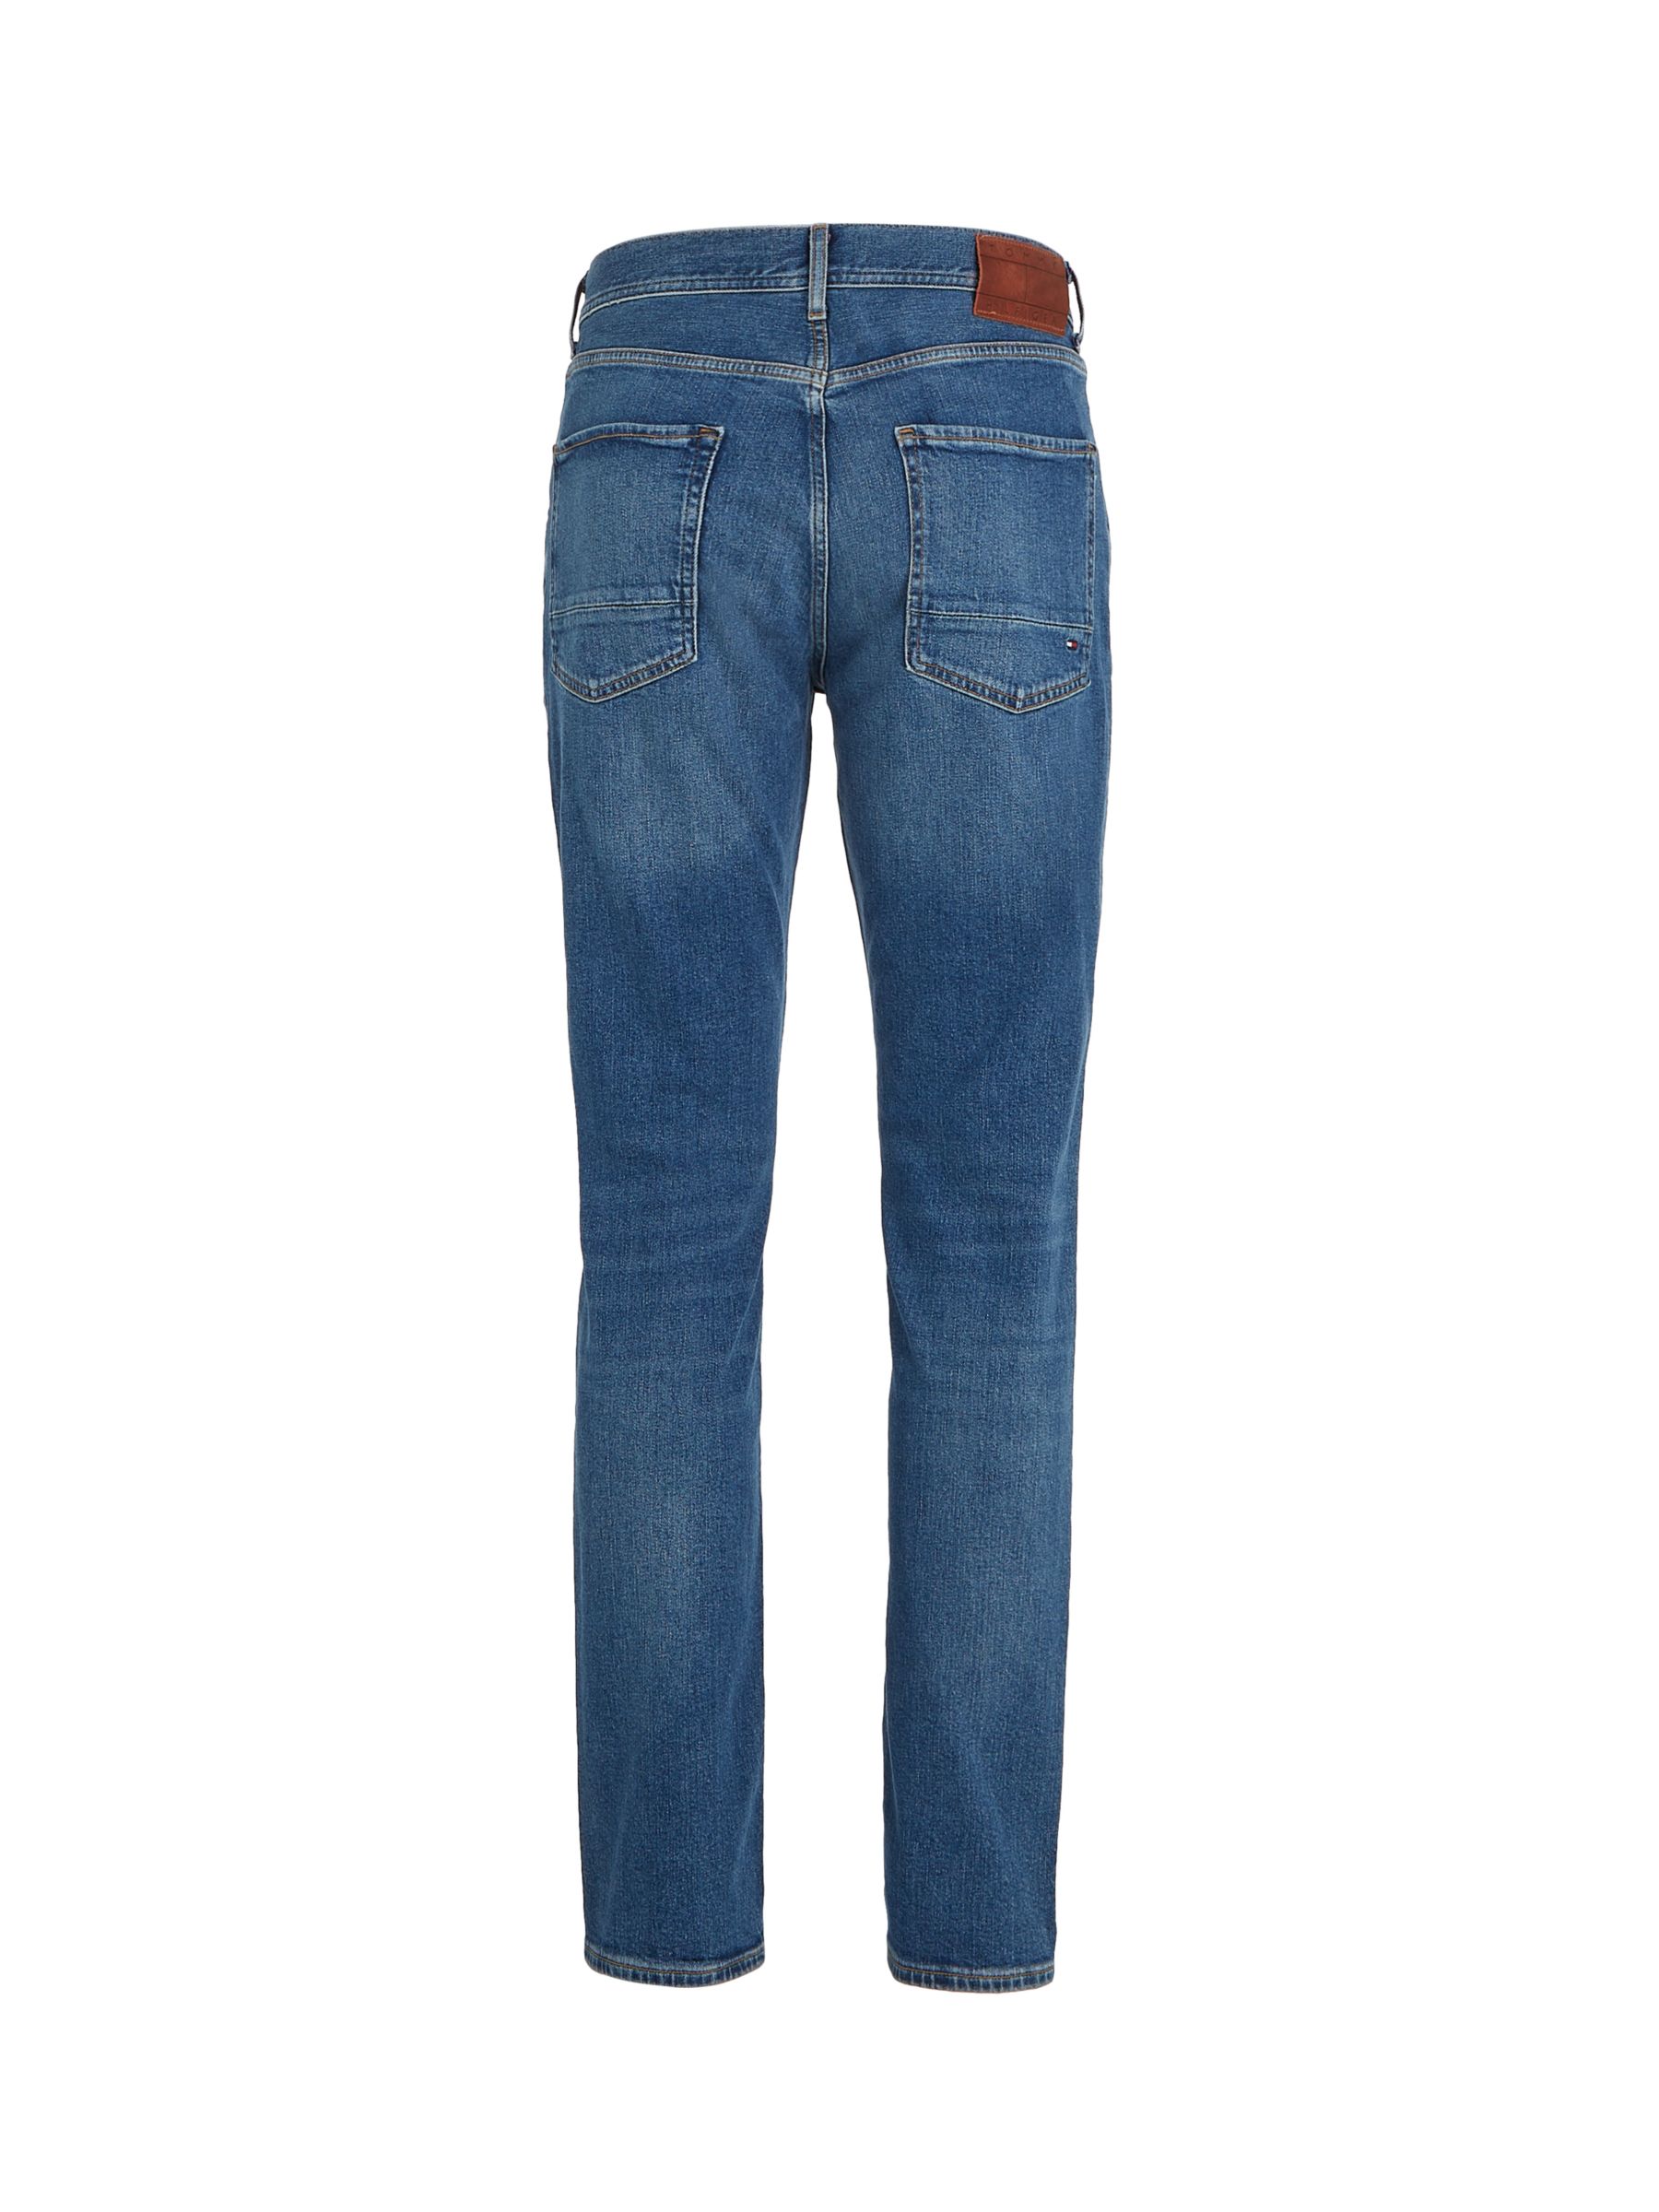 Tommy Hilfiger Denton Straight Jeans, Boston Blue at John Lewis & Partners